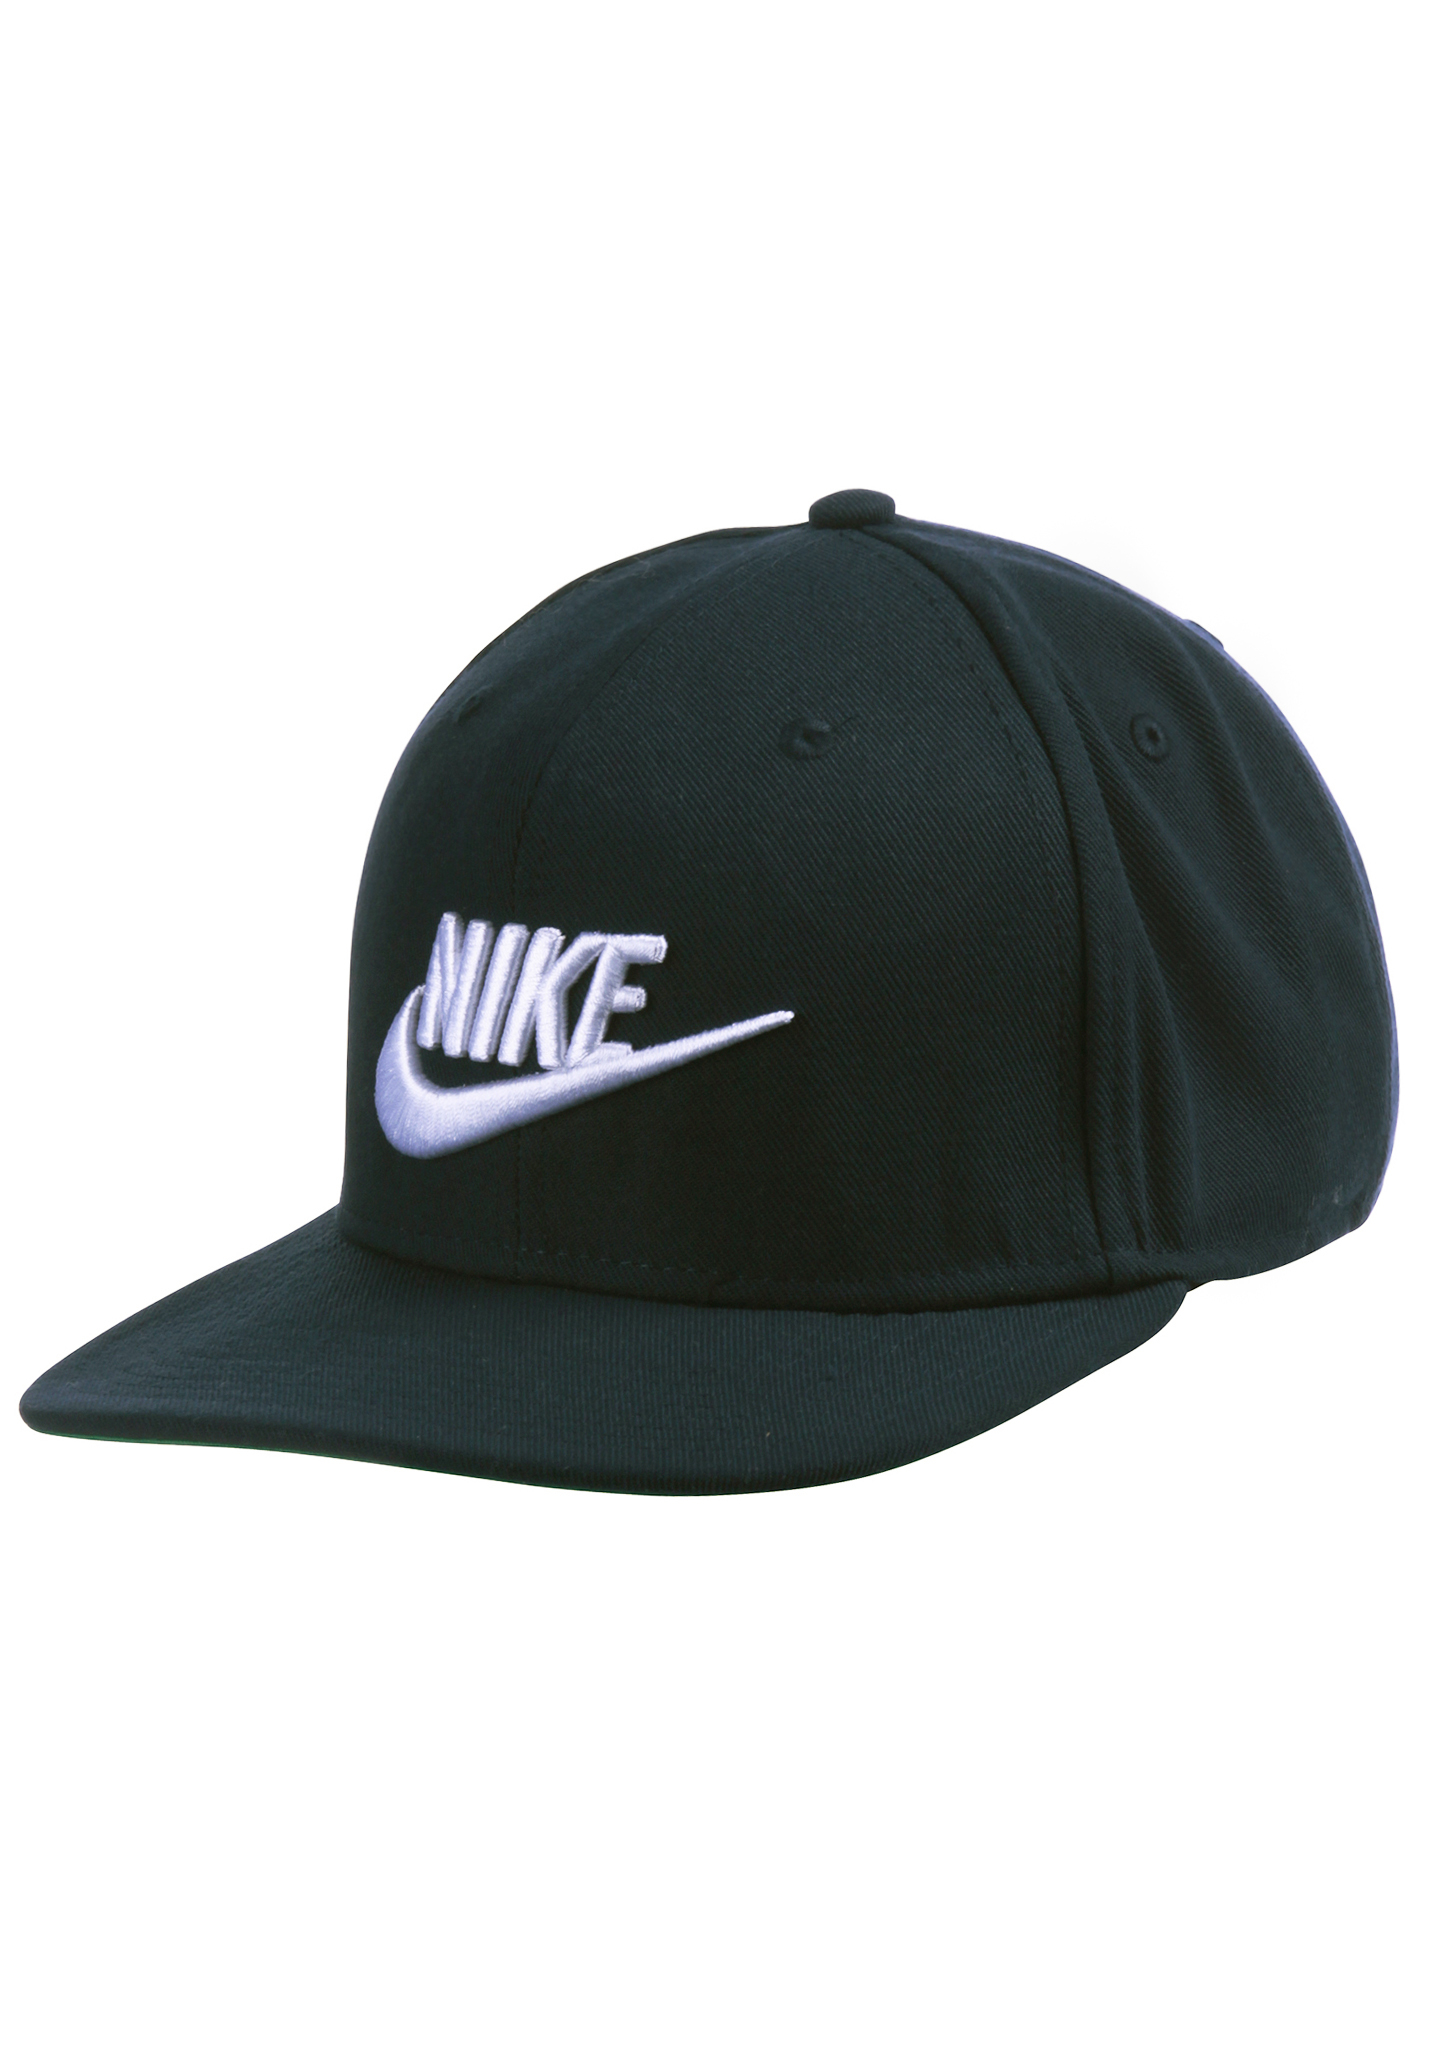 Nike Sportswear Pro Cap Futura obsidian/tannengrün/schwarz/weiß One Size